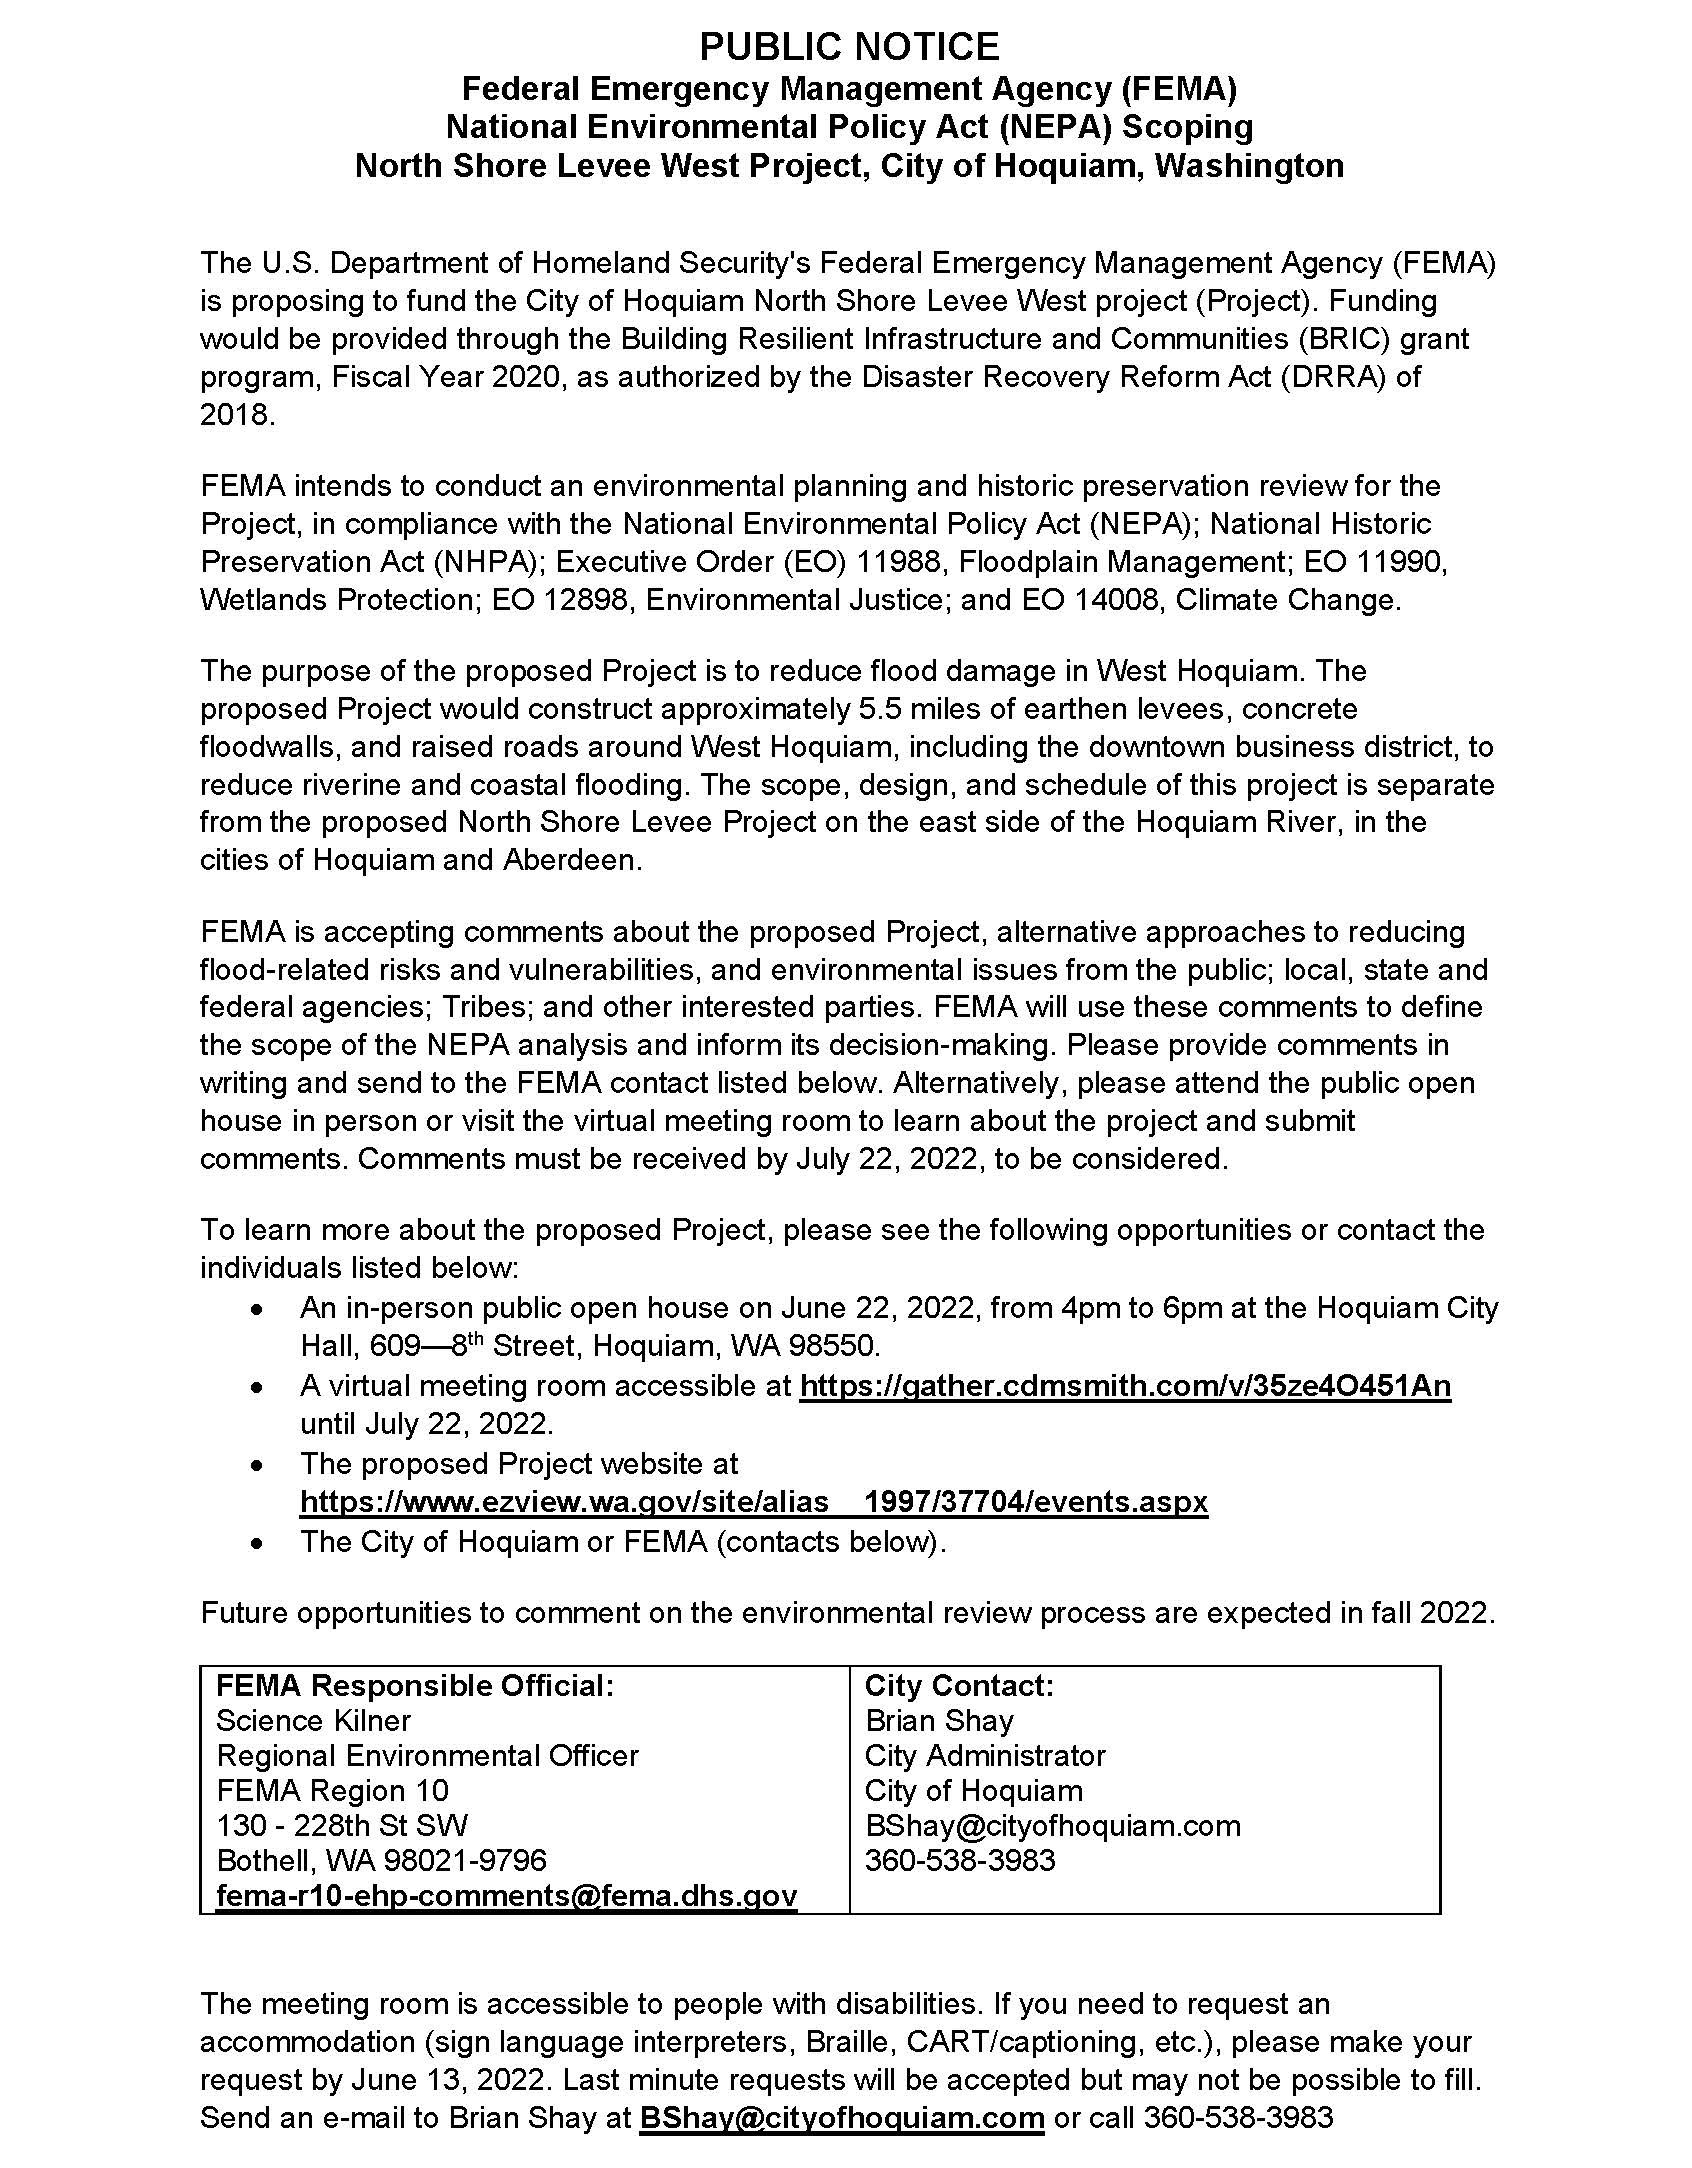 Public Notice of June 22,2022 NSL-W Open House